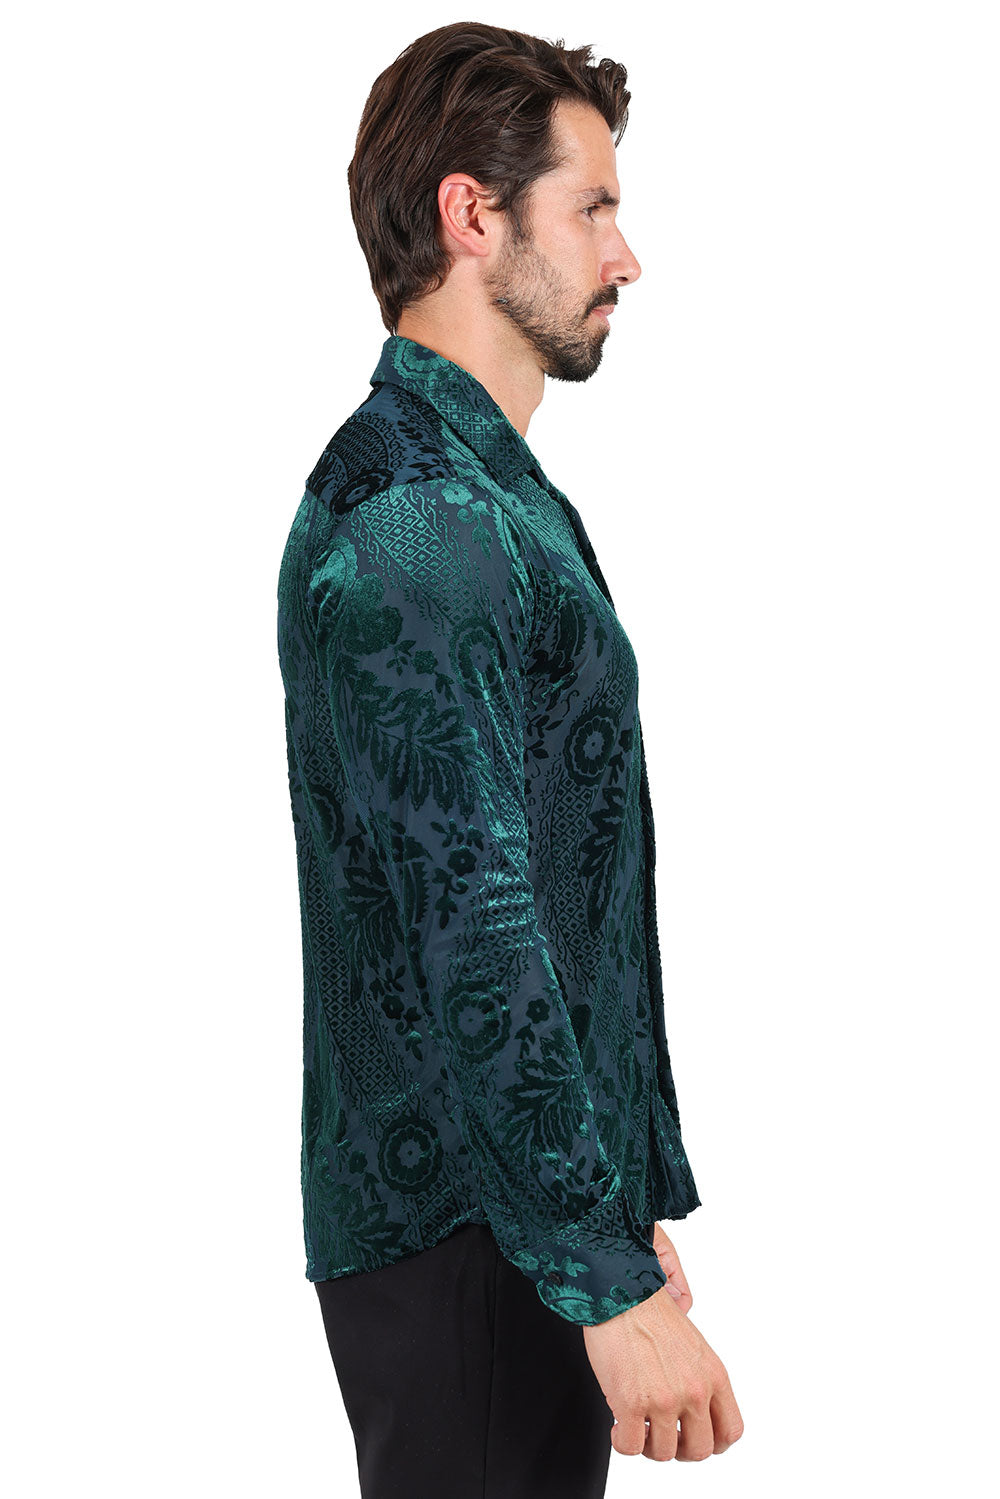 BARABAS Men's Floral Paisley See Through Long Sleeve Shirt 2SVL02 Green